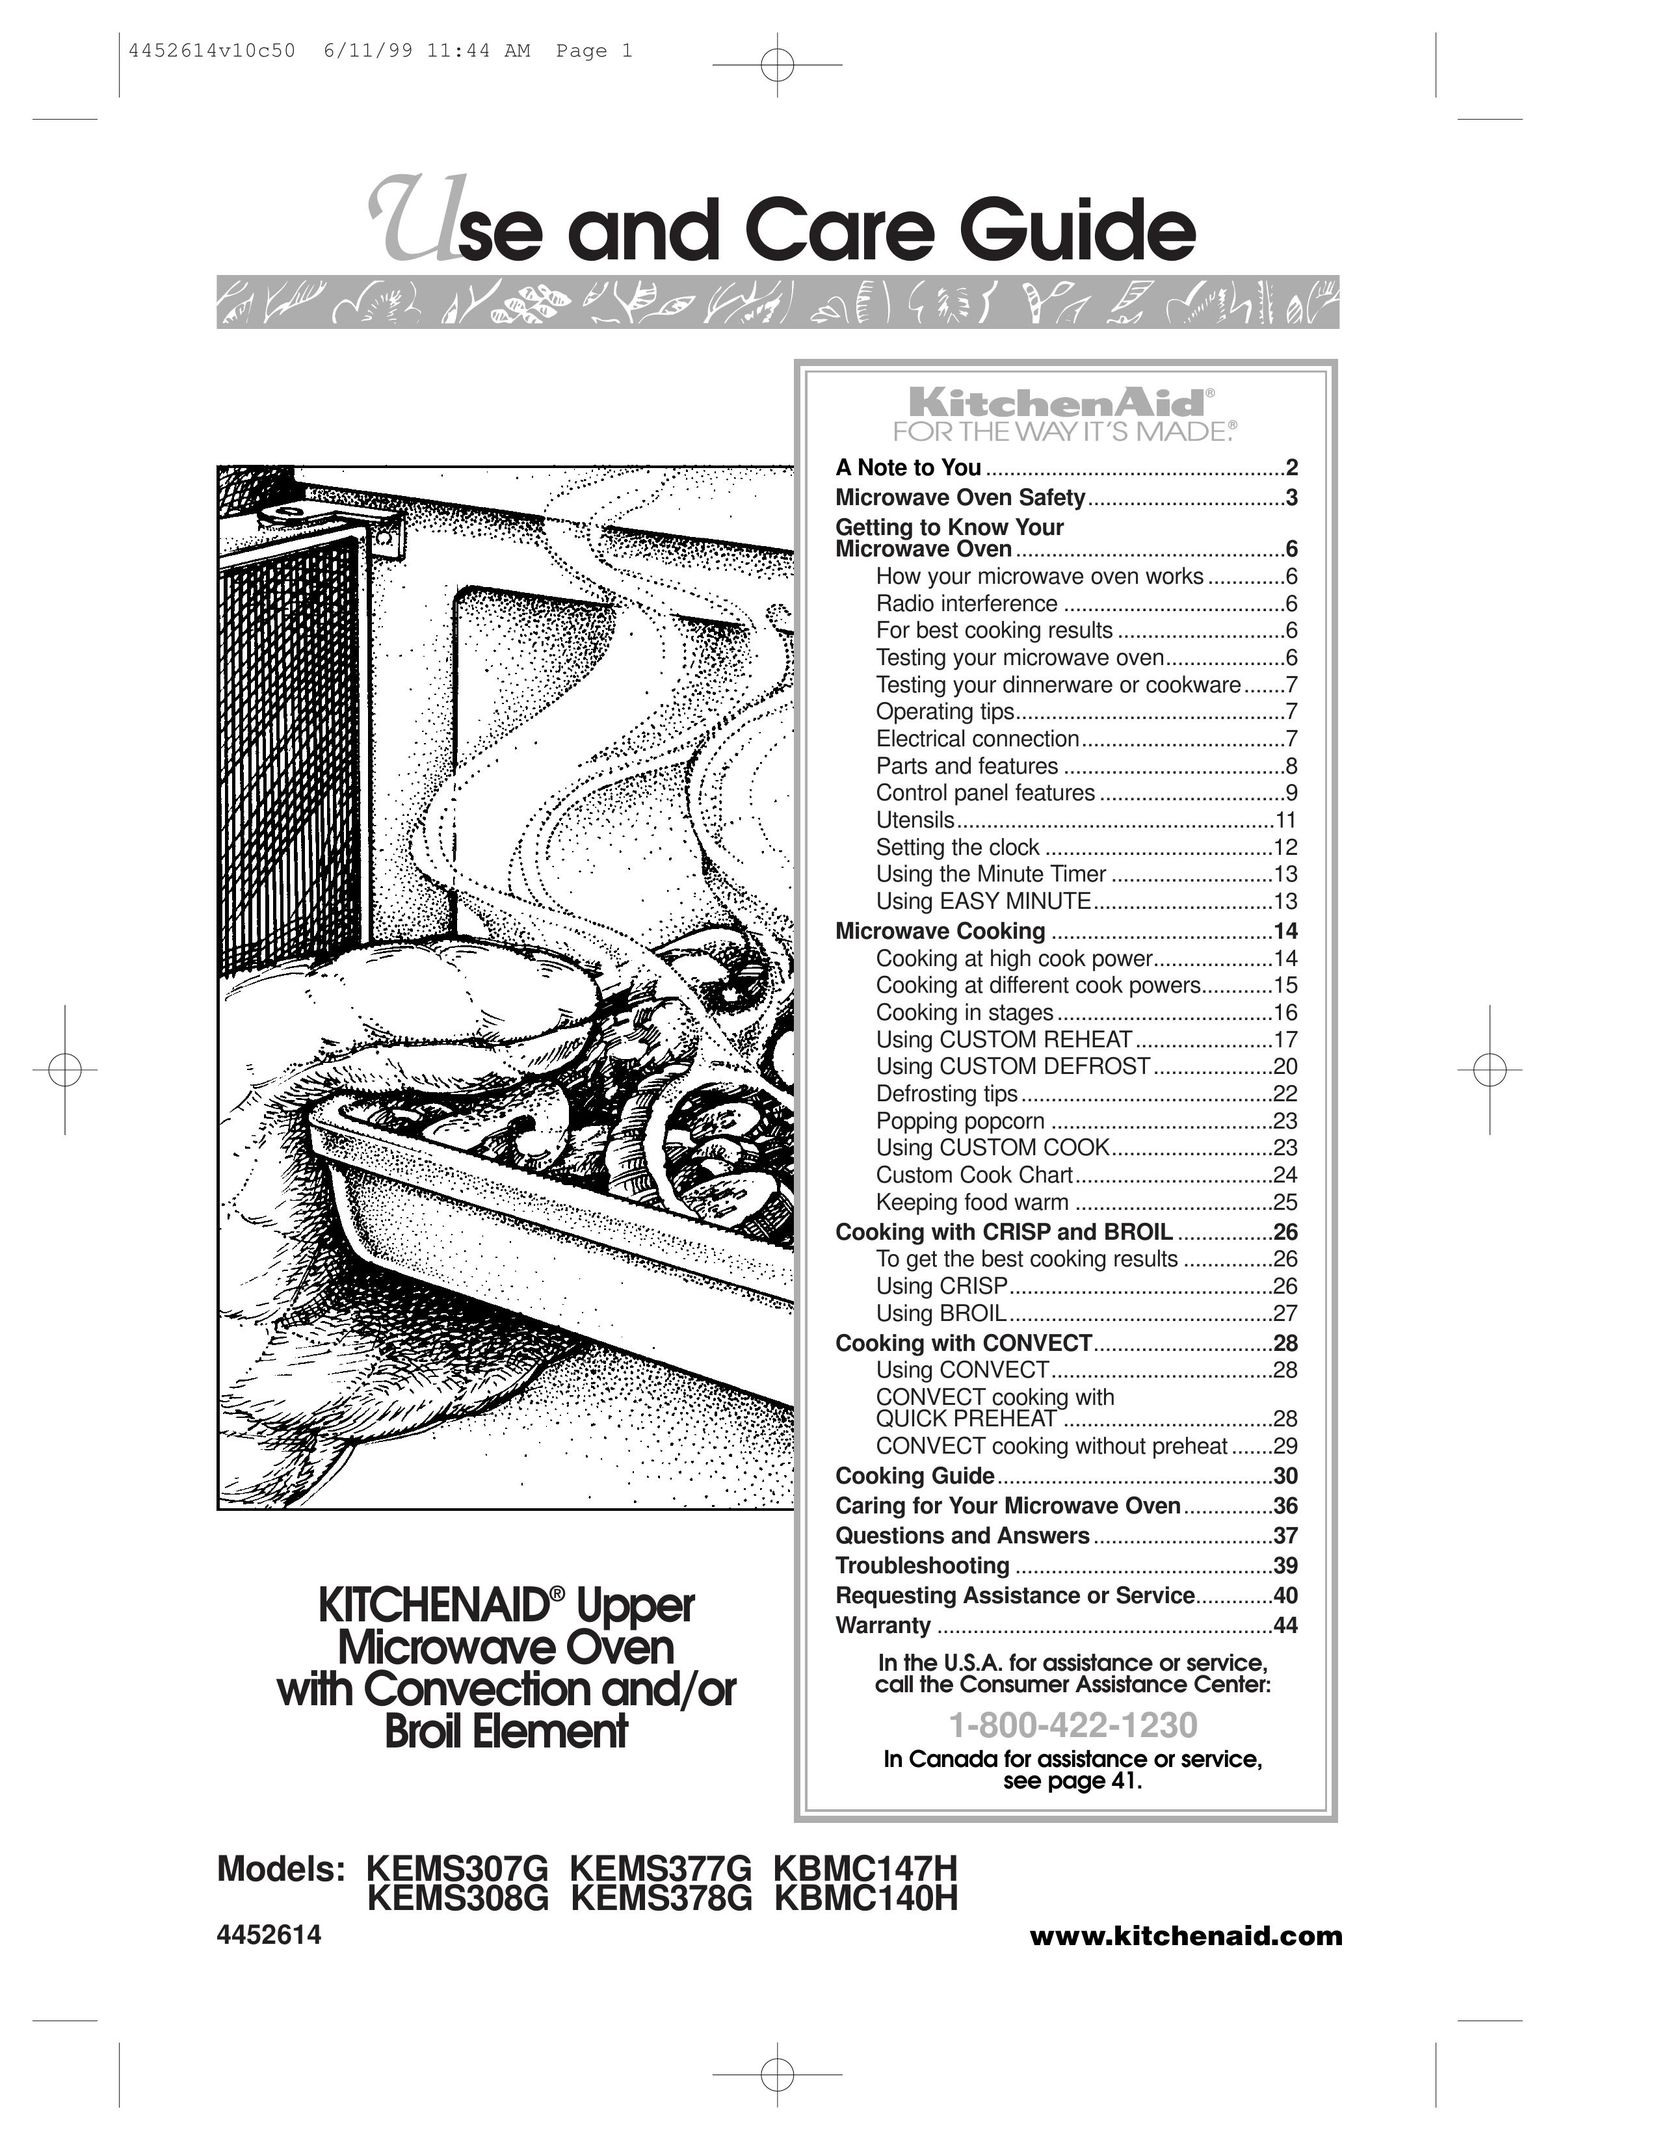 KitchenAid KBMC147H Microwave Oven User Manual